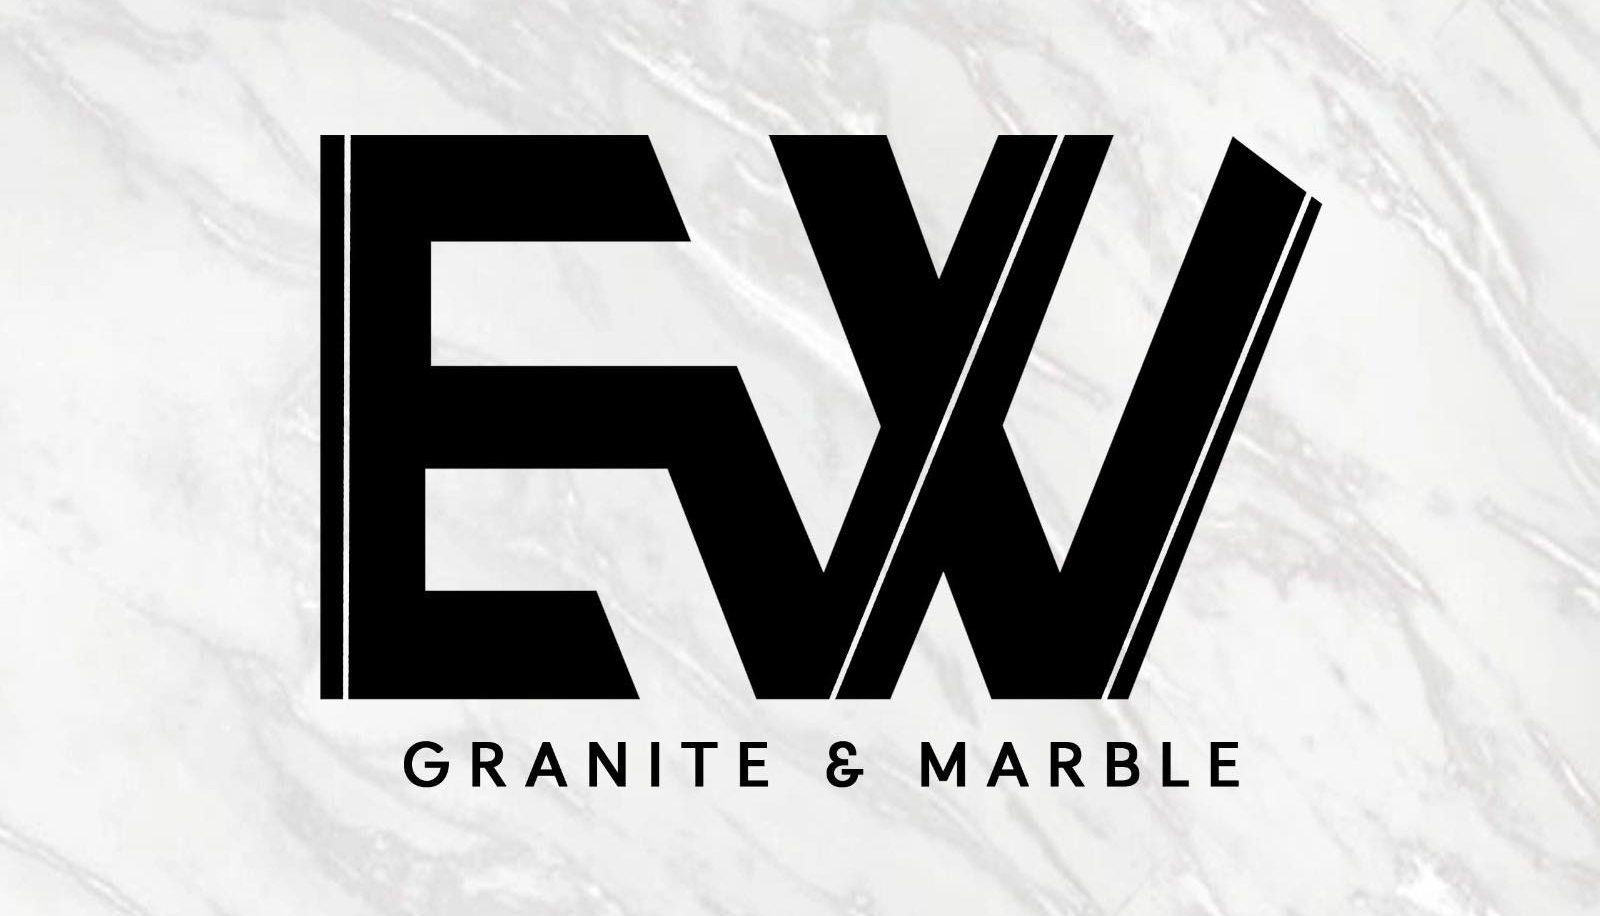 E.W. Granite & Marble, LLC